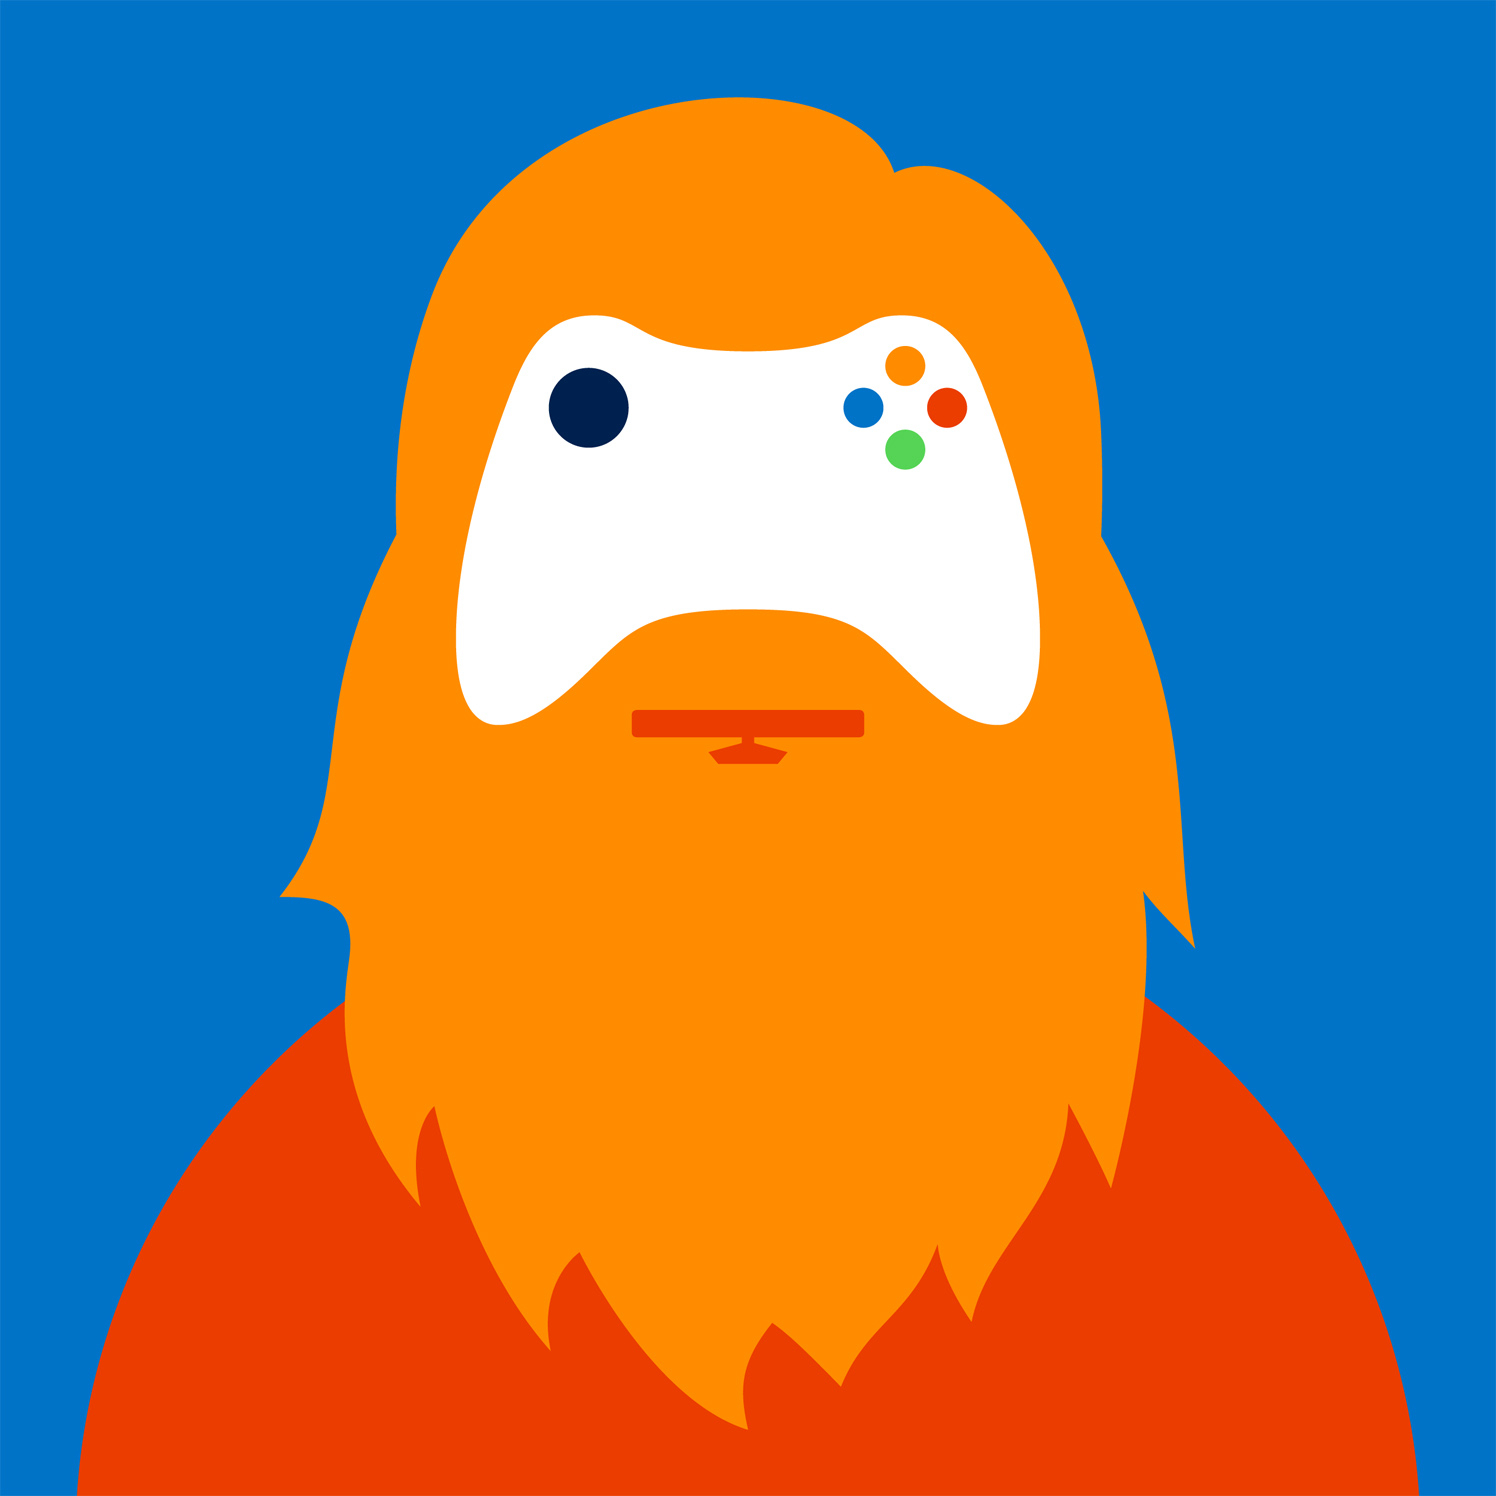 Bearded Xbox Dude